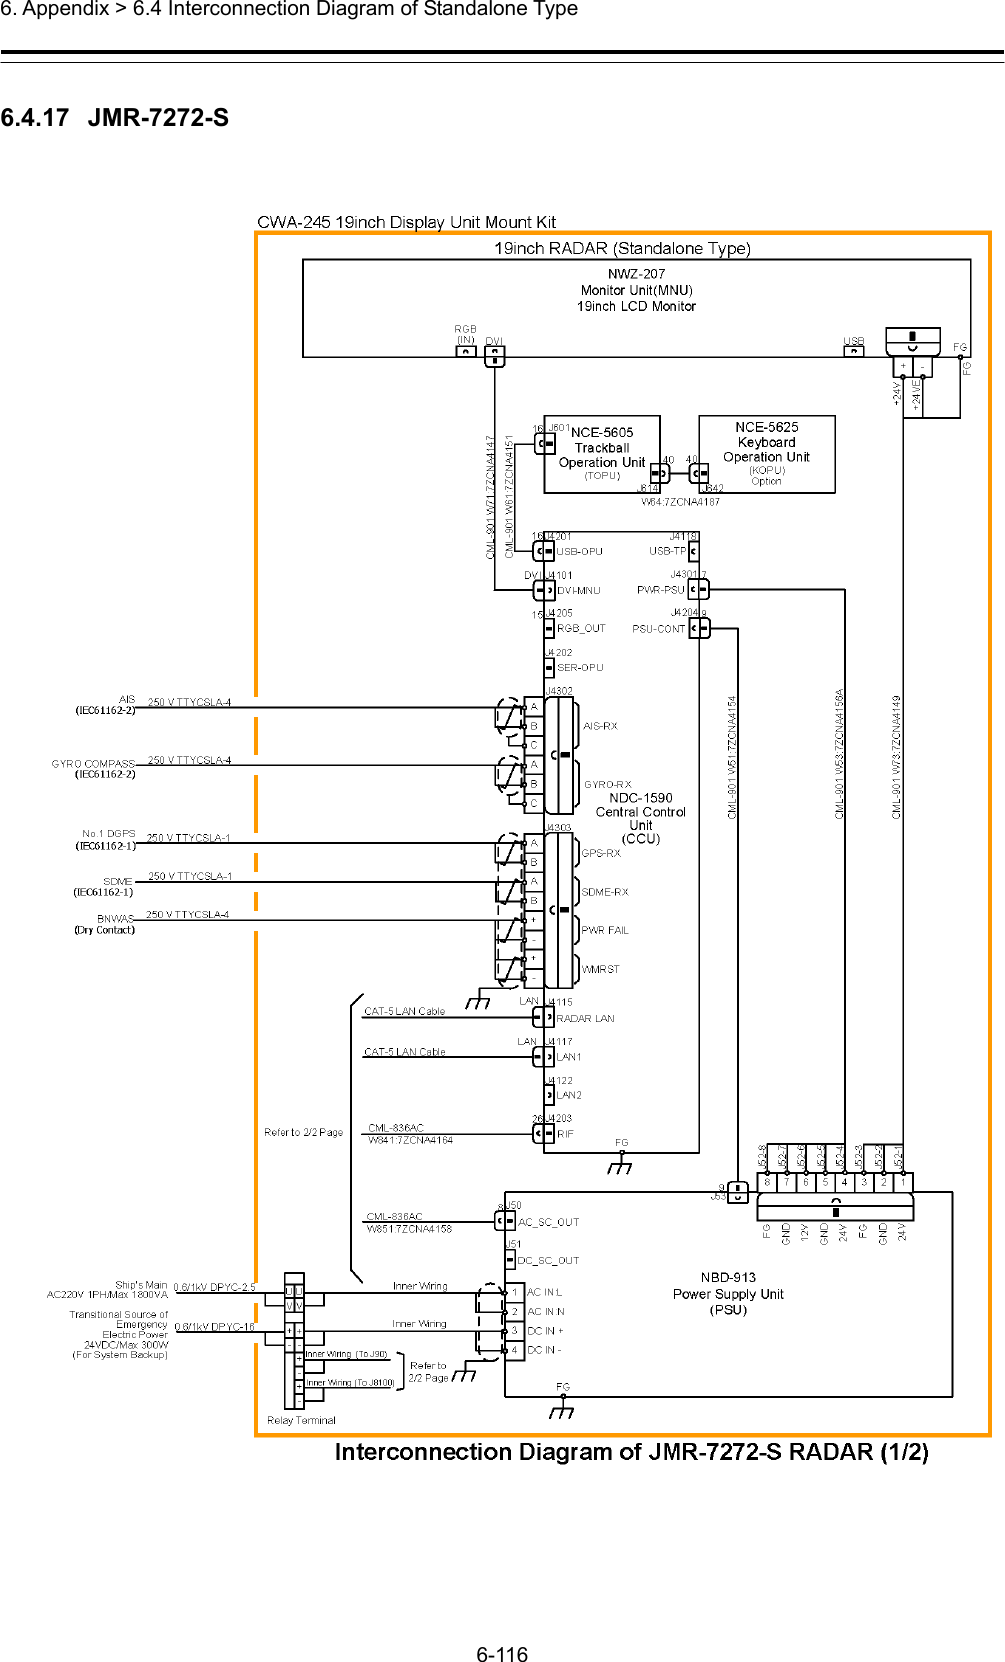  6. Appendix &gt; 6.4 Interconnection Diagram of Standalone Type 6-116  6.4.17  JMR-7272-S 